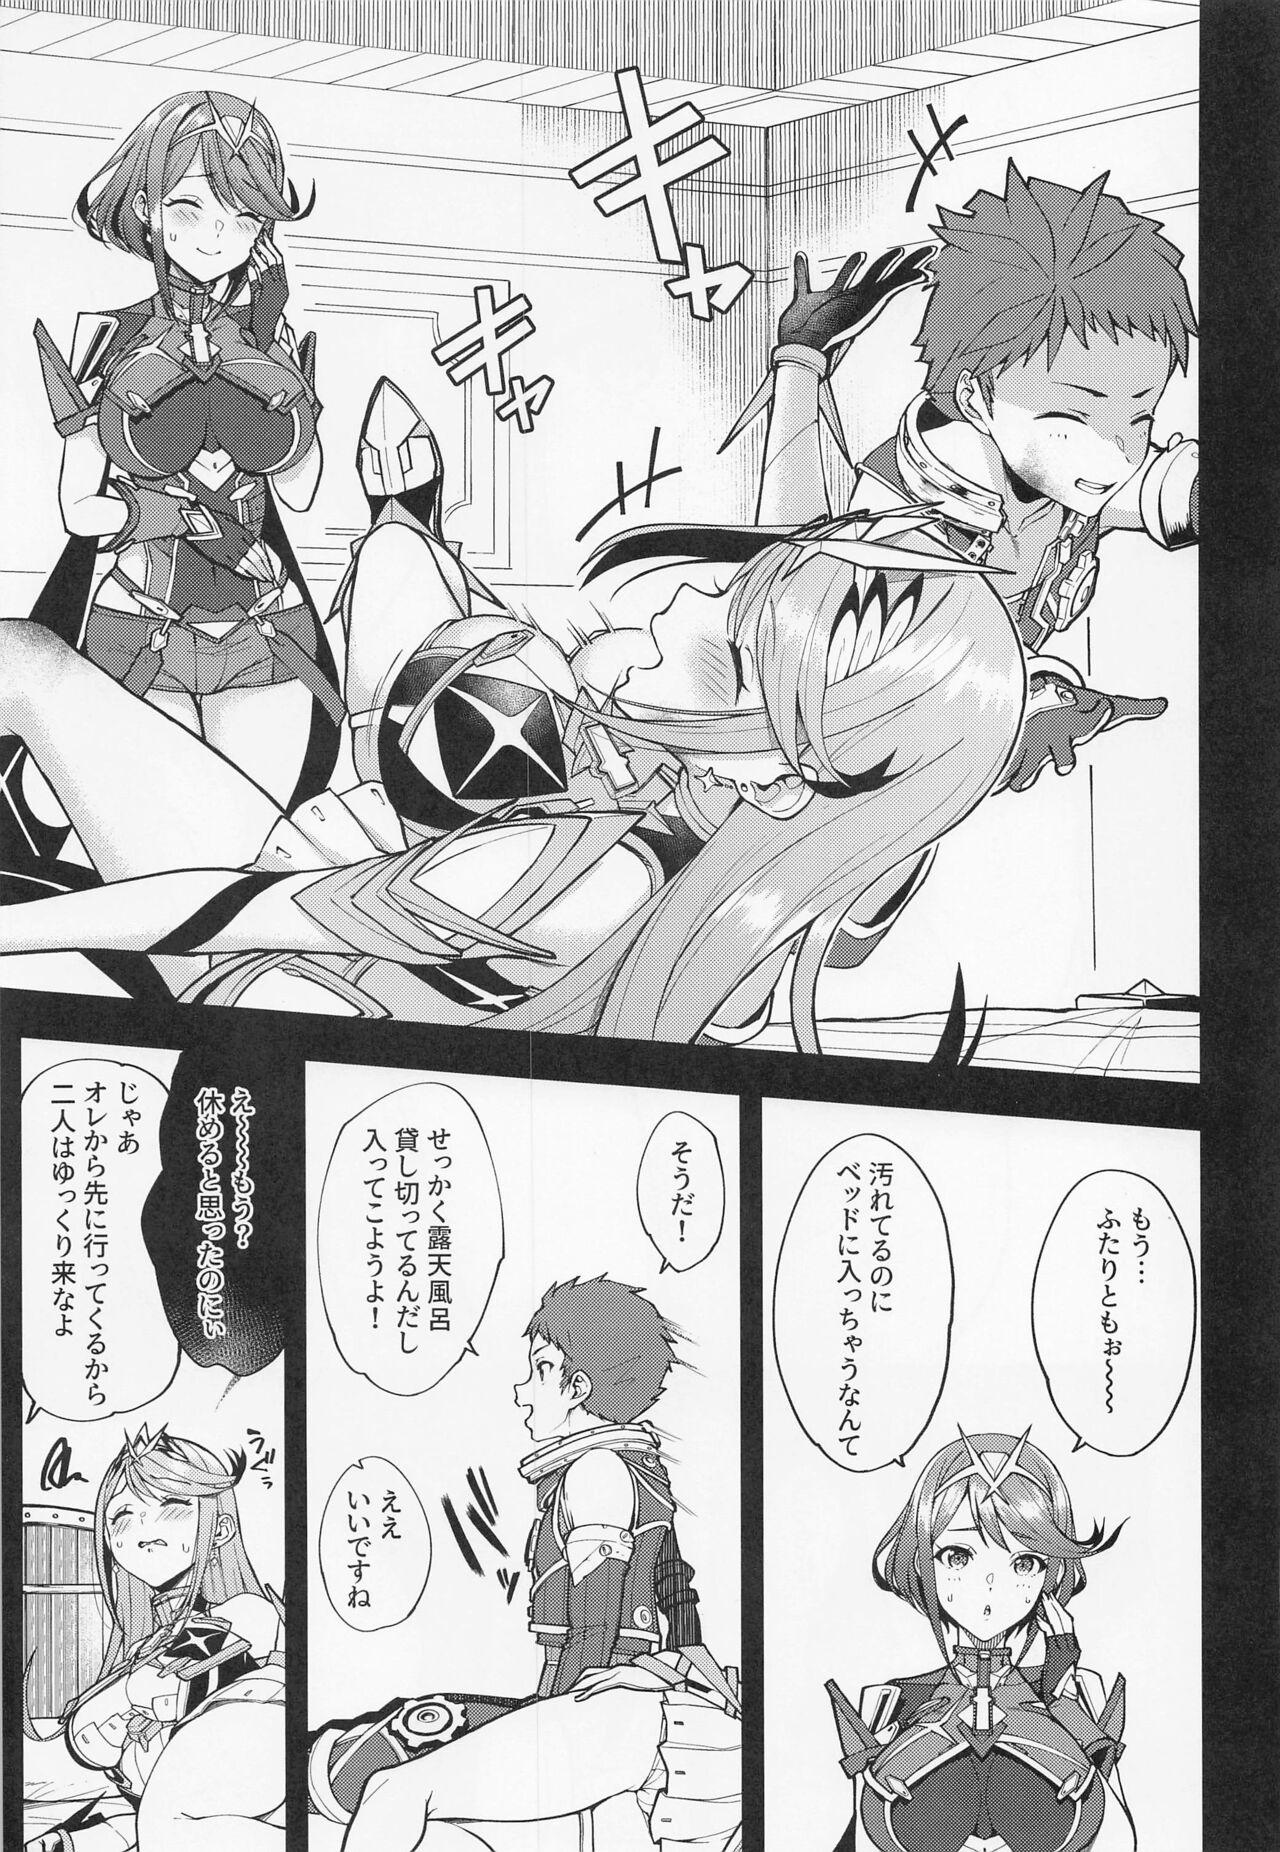 Lesbo yozoranikagayakutomoshibi - Xenoblade chronicles 2 Step Fantasy - Page 4